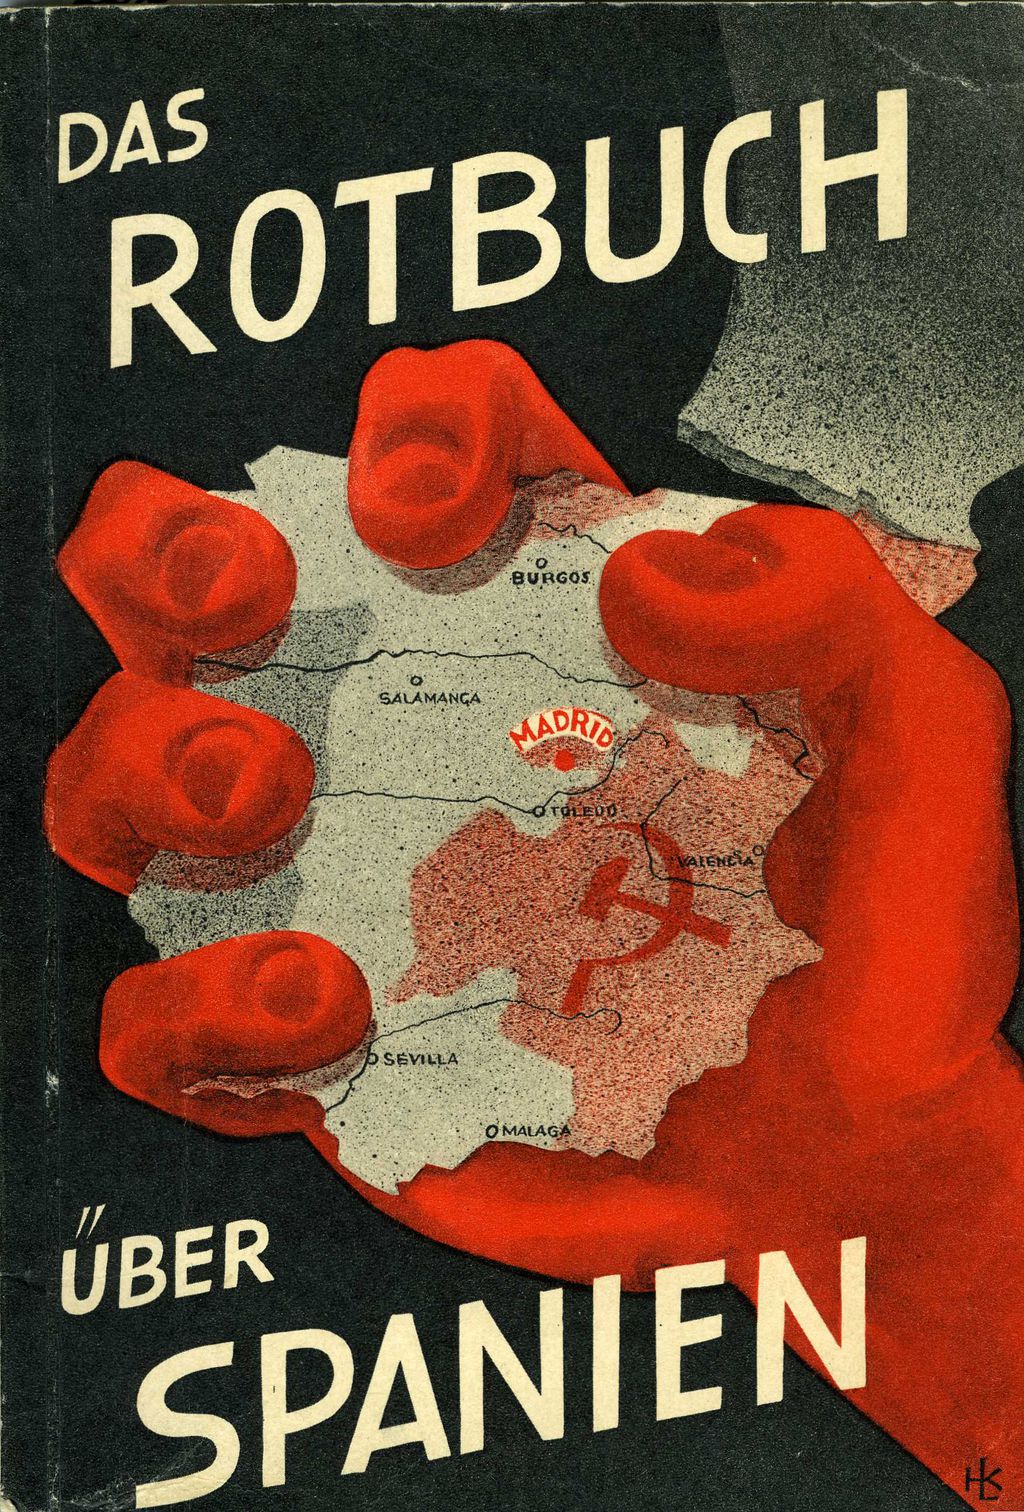 Buch: "Das Rotbuch über Spanien", 1937